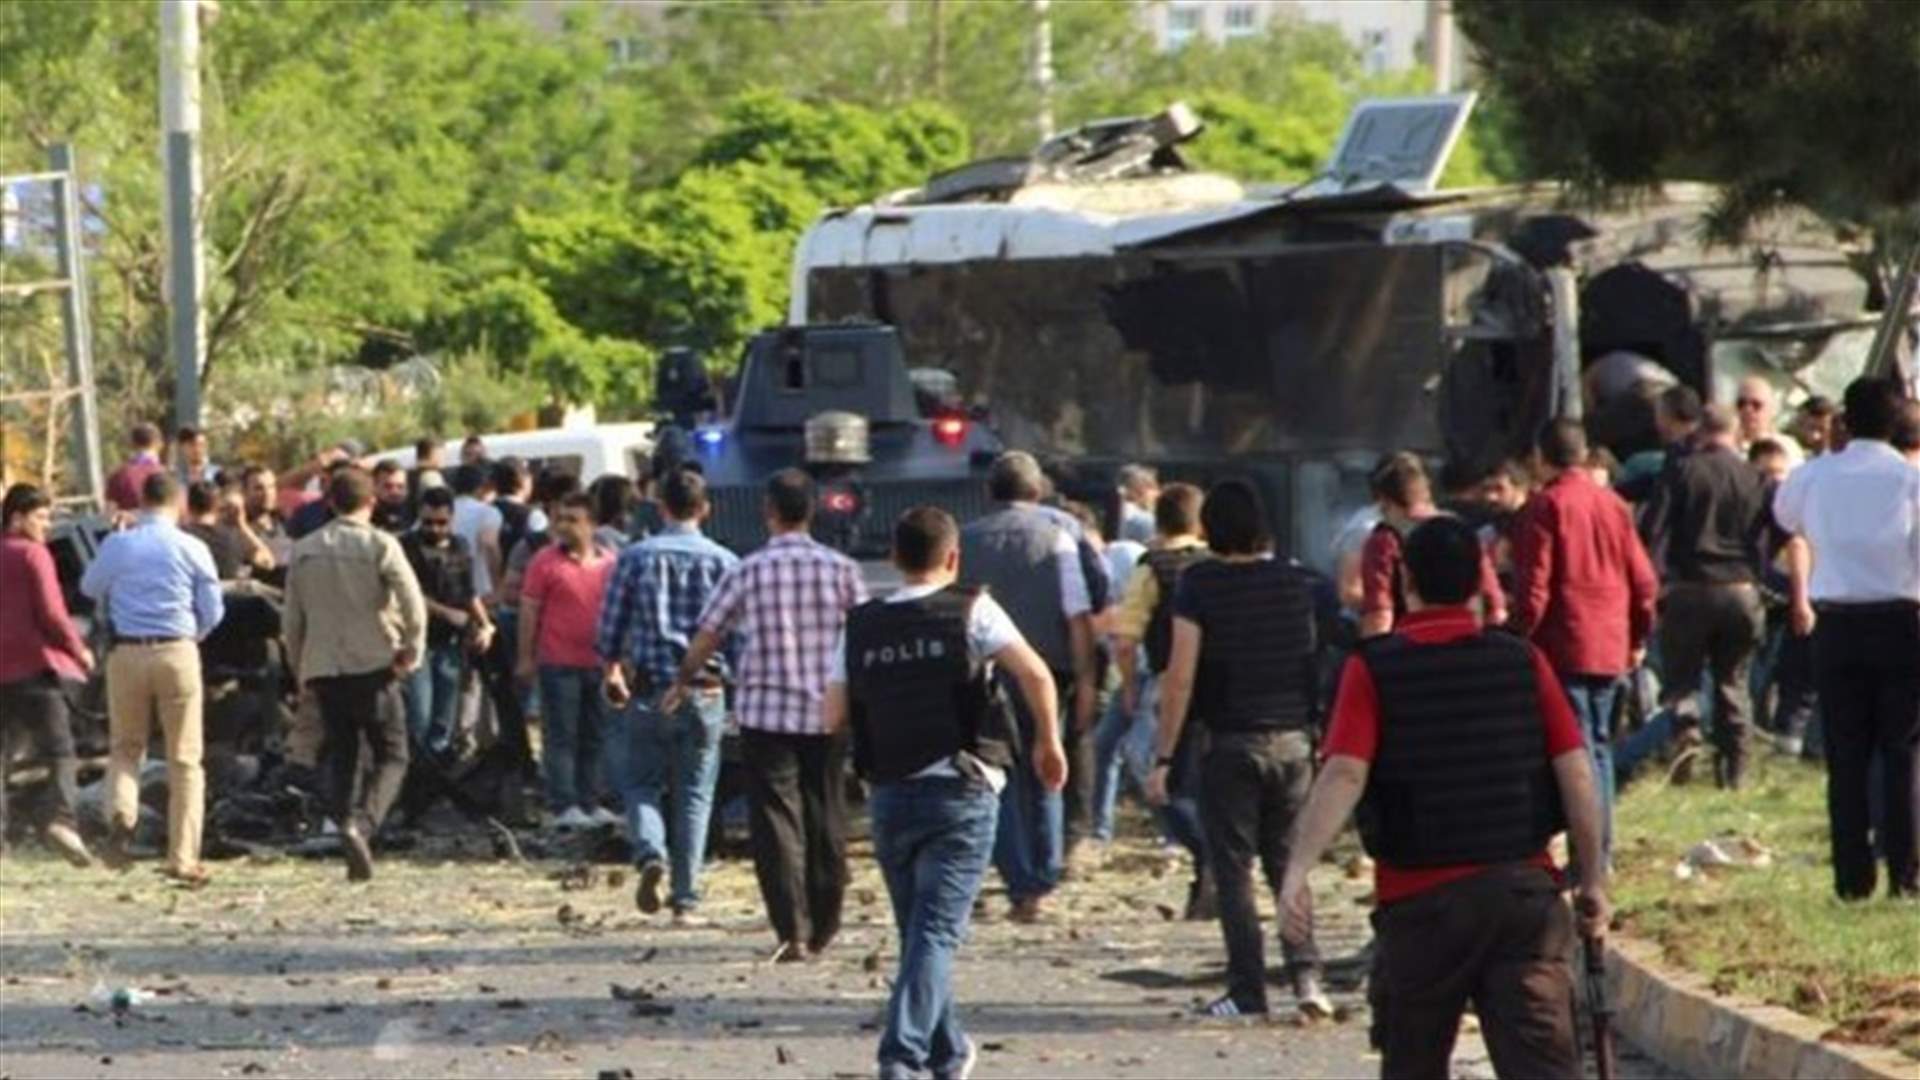 PKK attack on military vehicle in Turkey: 2 killed, 8 hurt